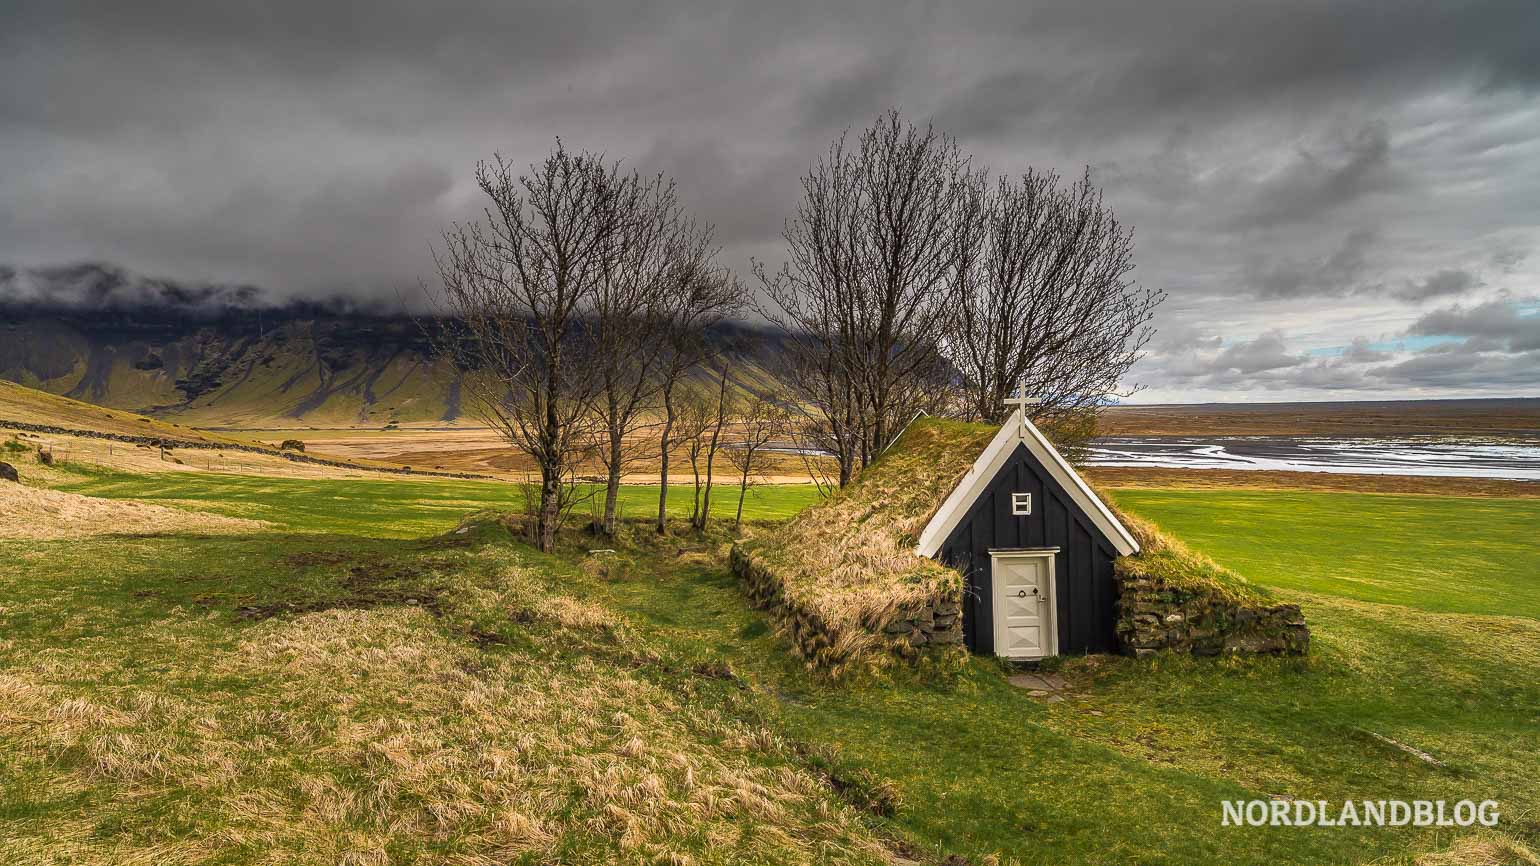 Núpsstaður Kirche Island Nordlandblog Kastenwagen Rundreise